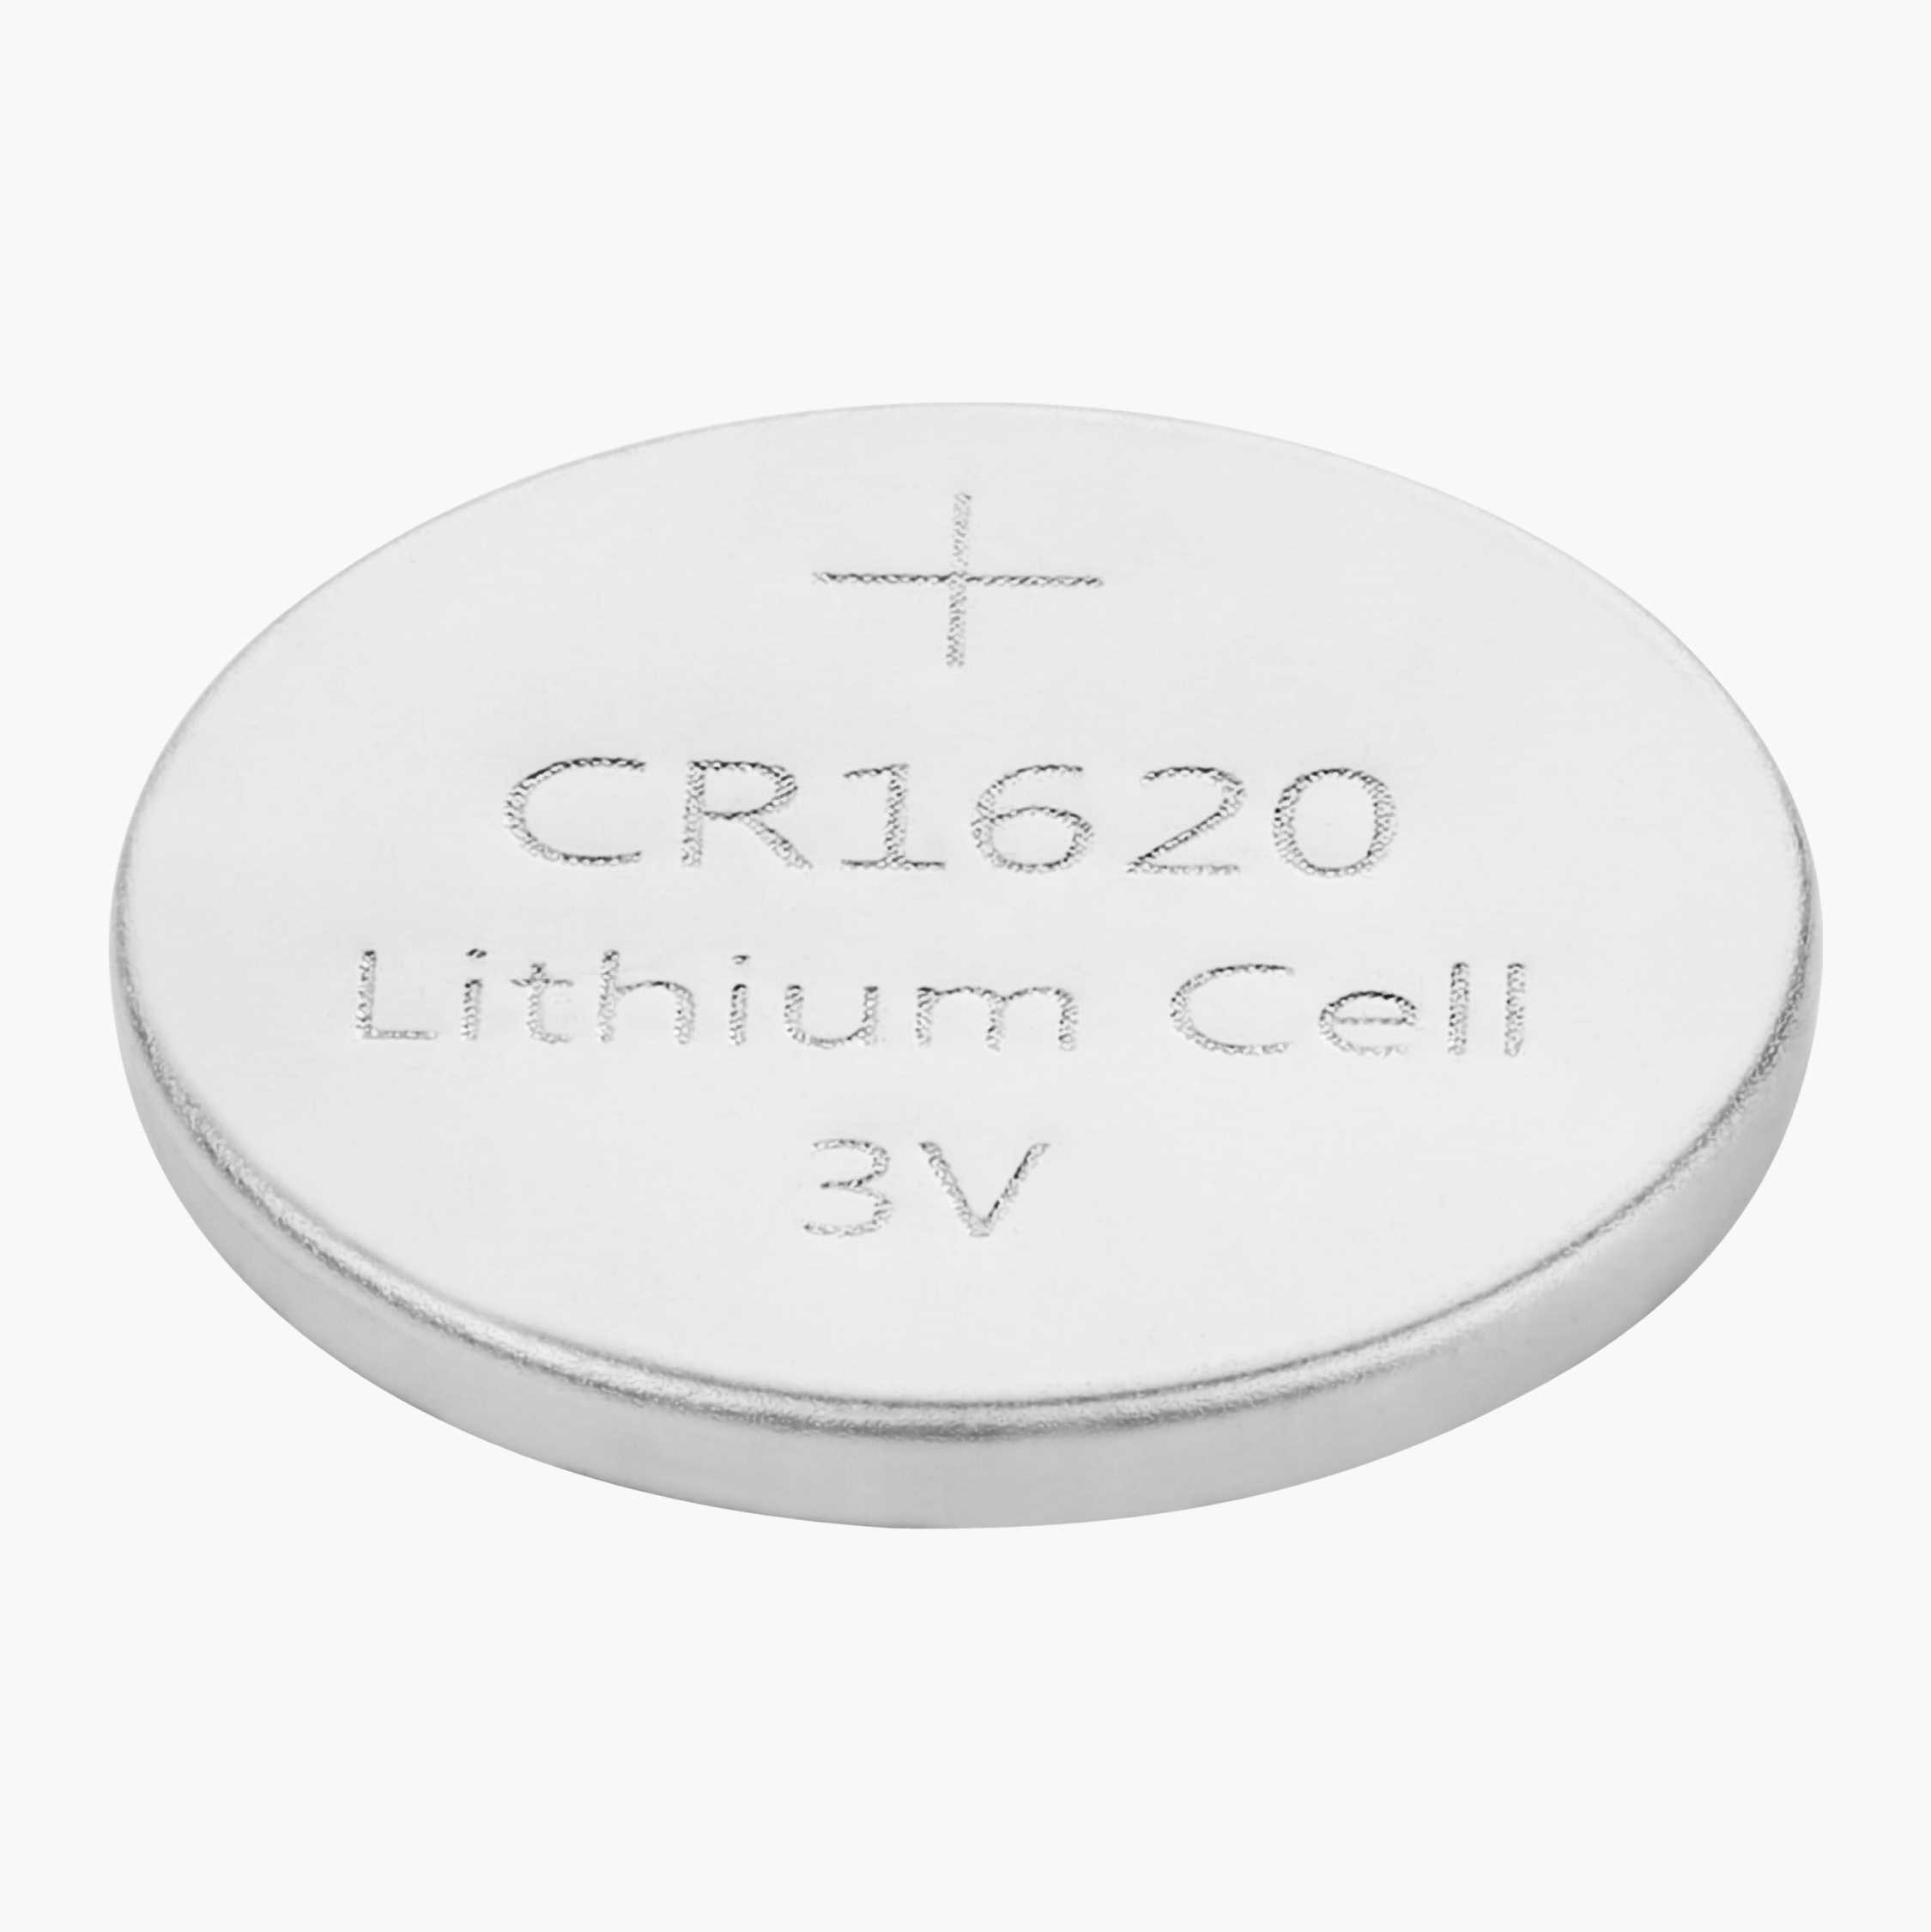 Ond lomme browser CR1620 Litiumbatteri, 2 stk. - Biltema.dk